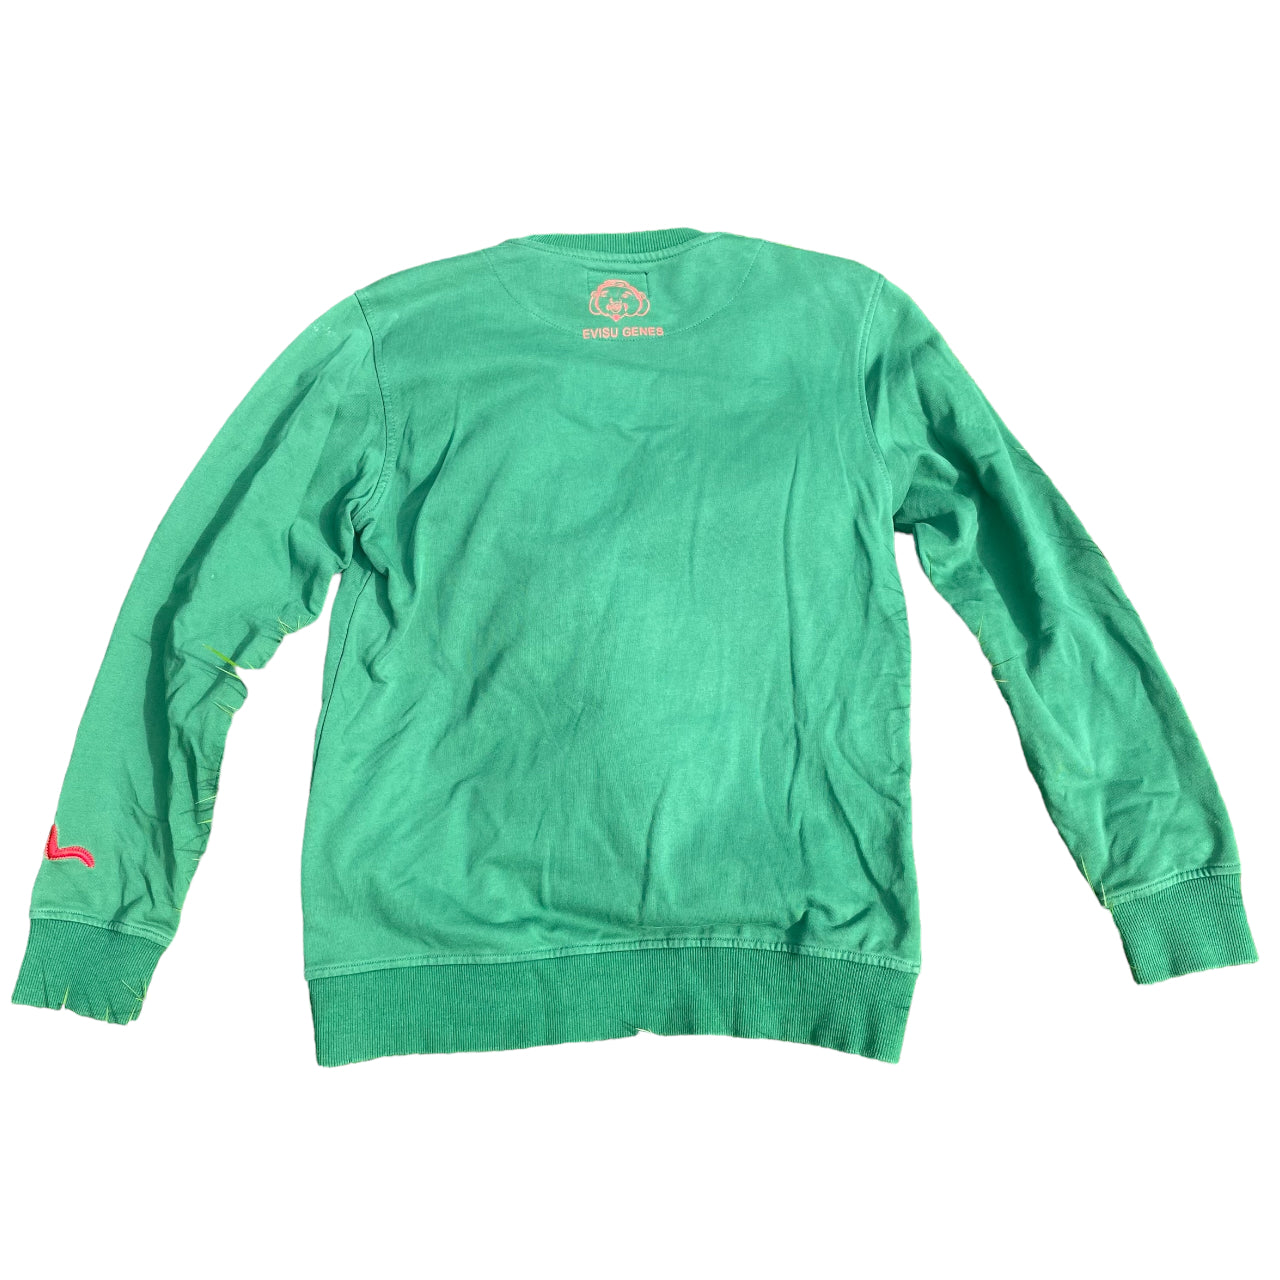 Vintage Evisu Sweatshirt Retro Big Logo M Size Green A_67